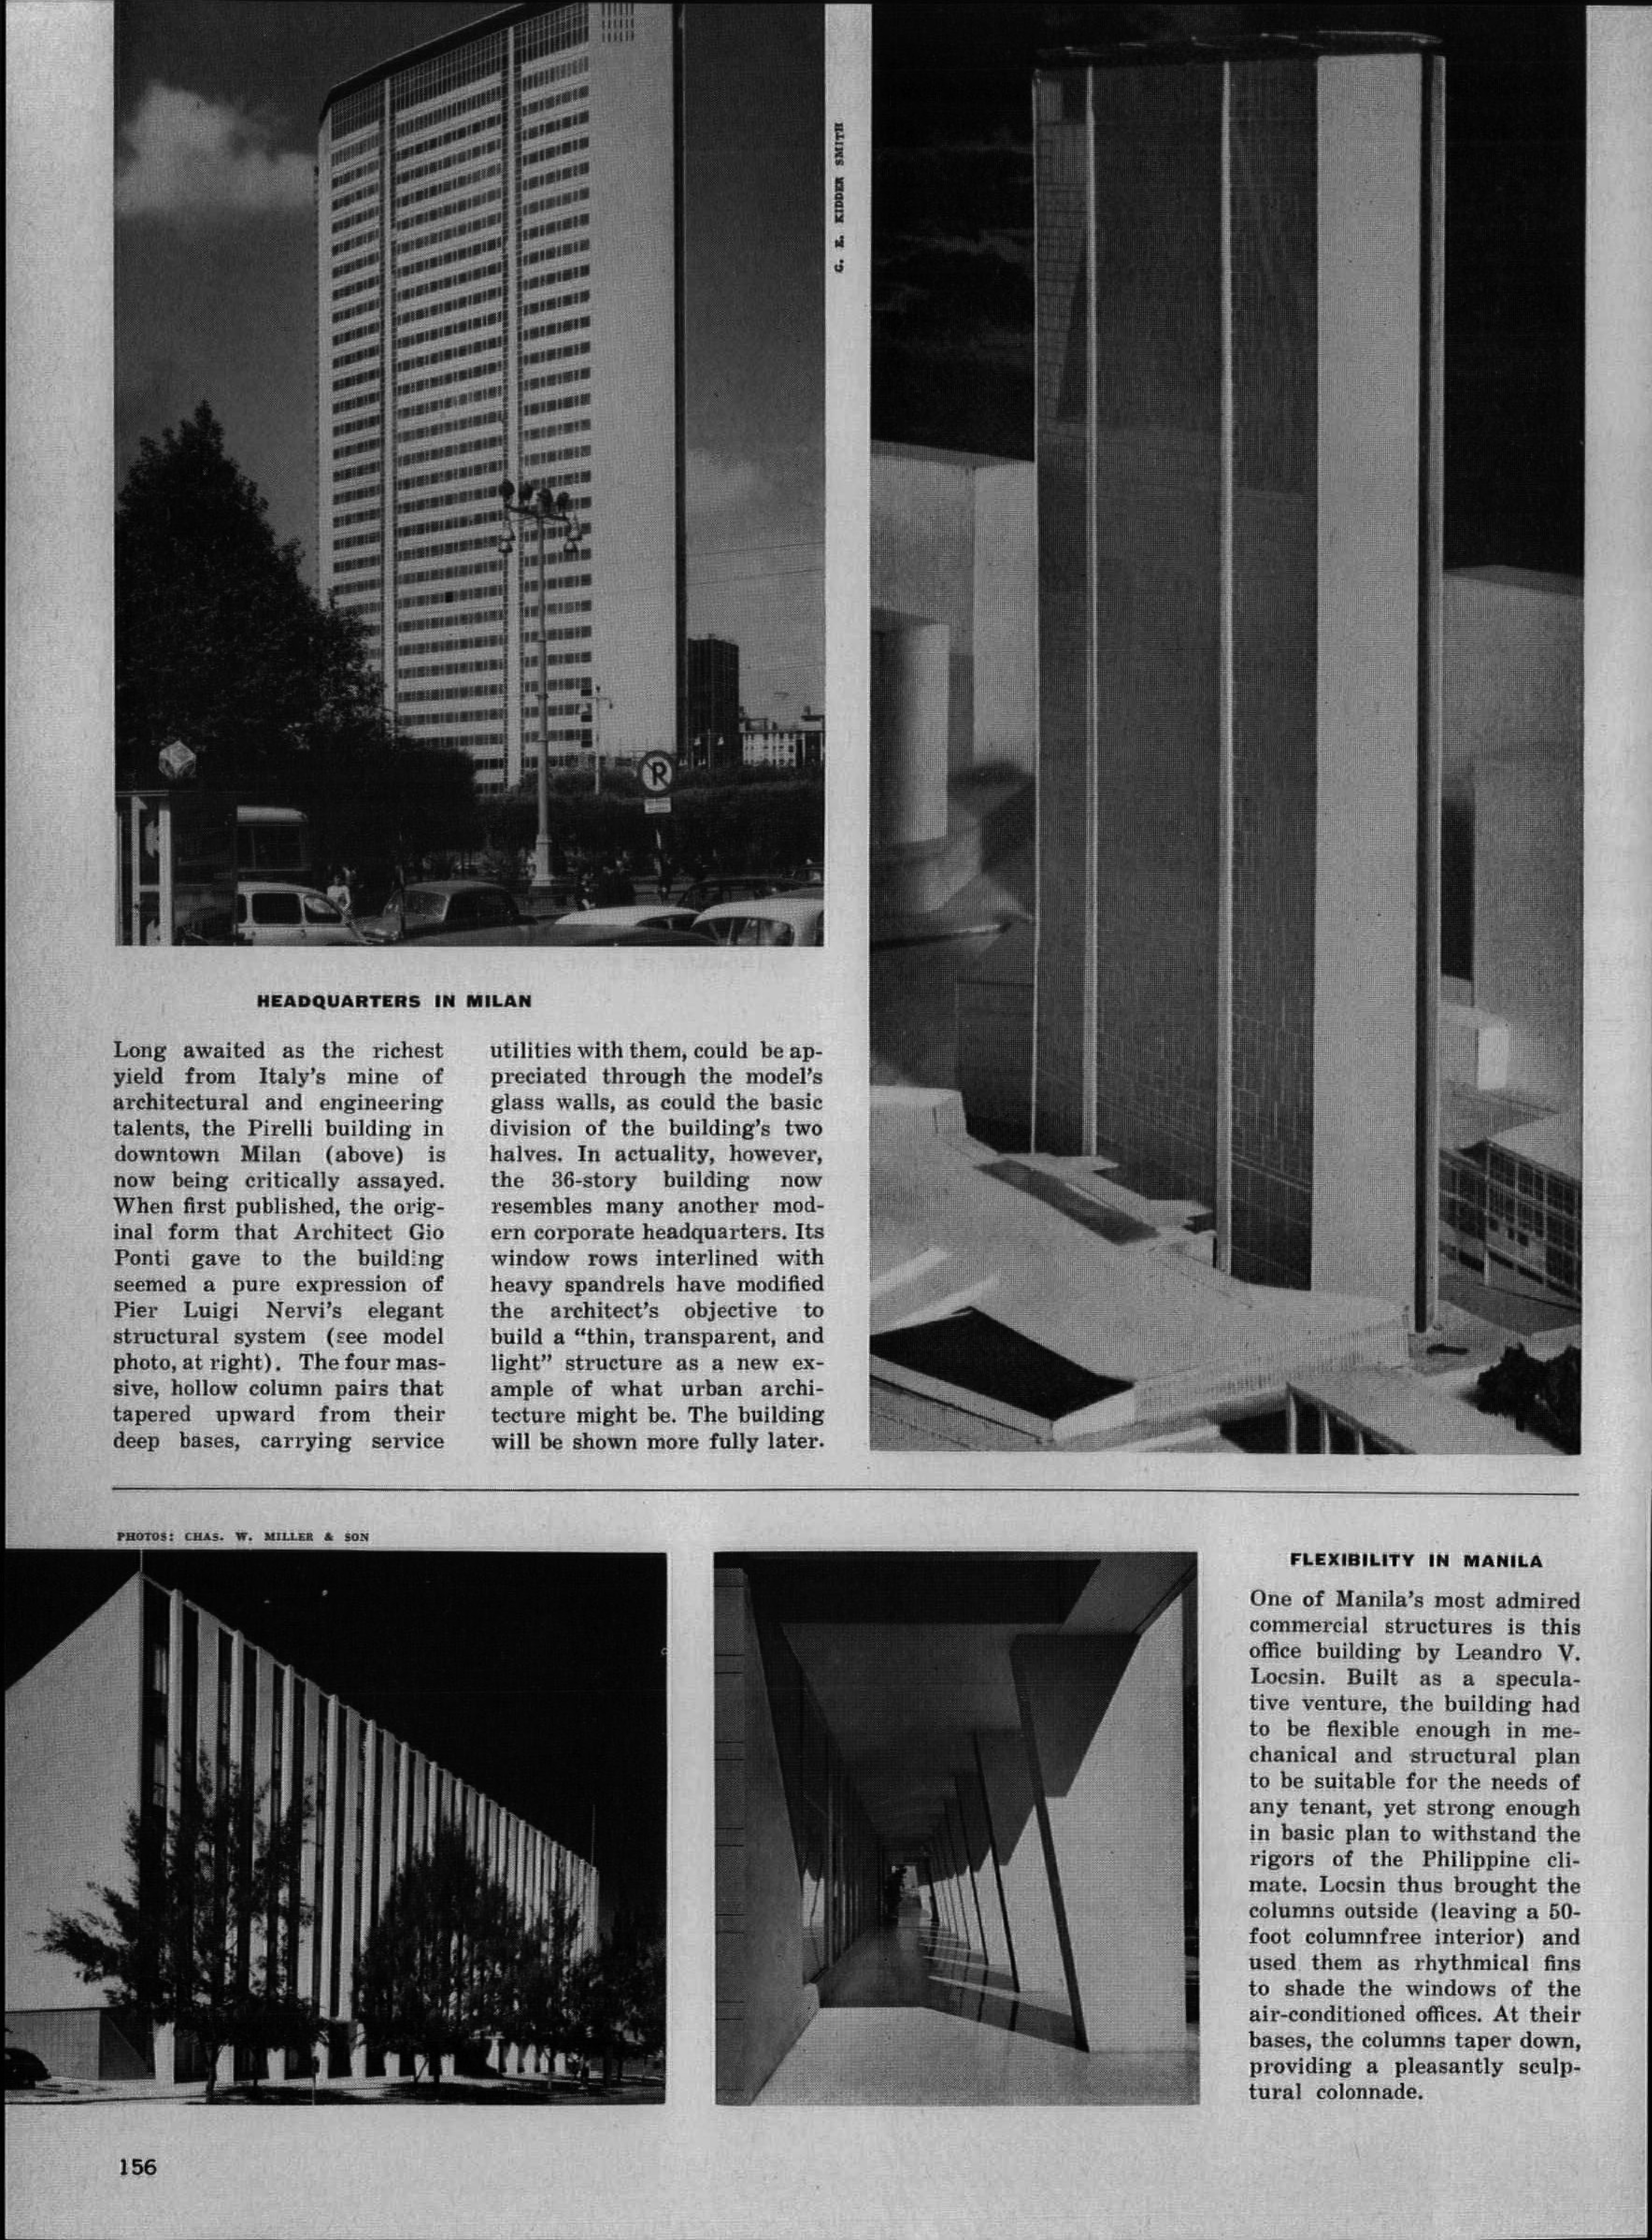 1960. “Headquarters in Milan (Pirelli building, Gio Ponti and Pier Luigi Nervi)”, Architectural Forum, 112, no. 4 (April): 156.